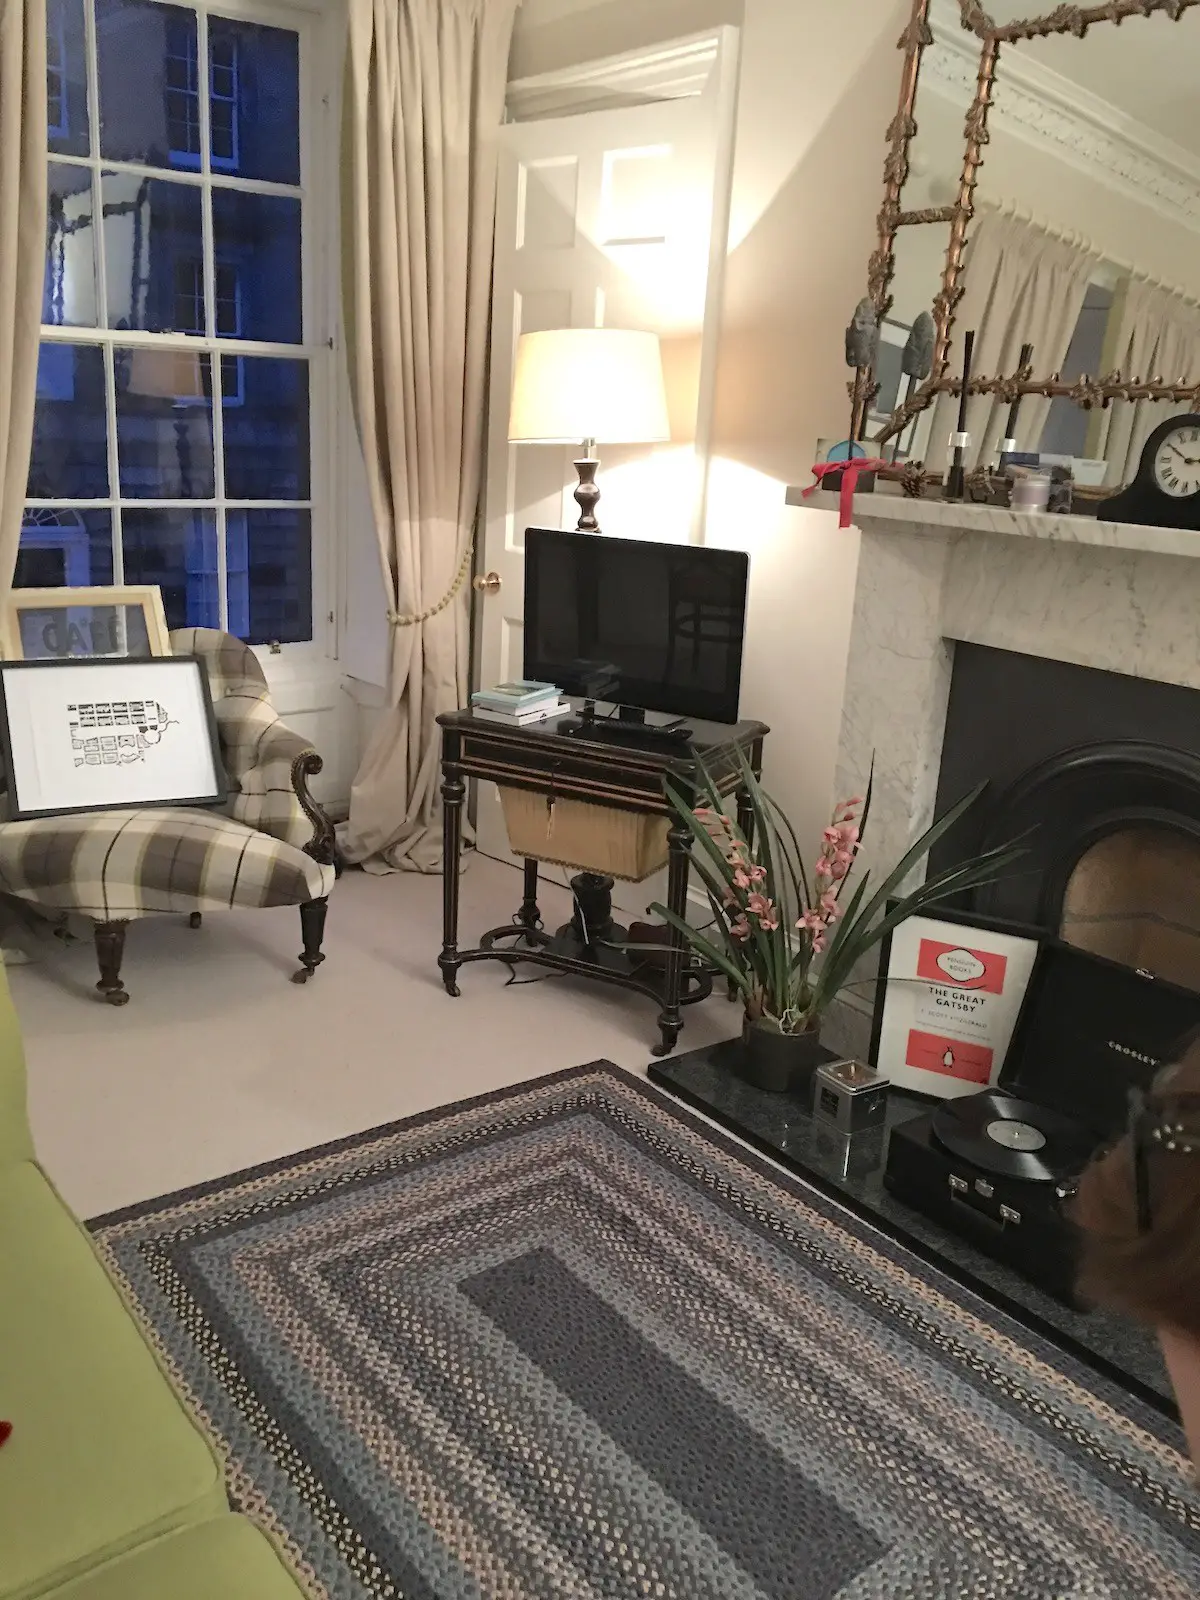 Living room interior